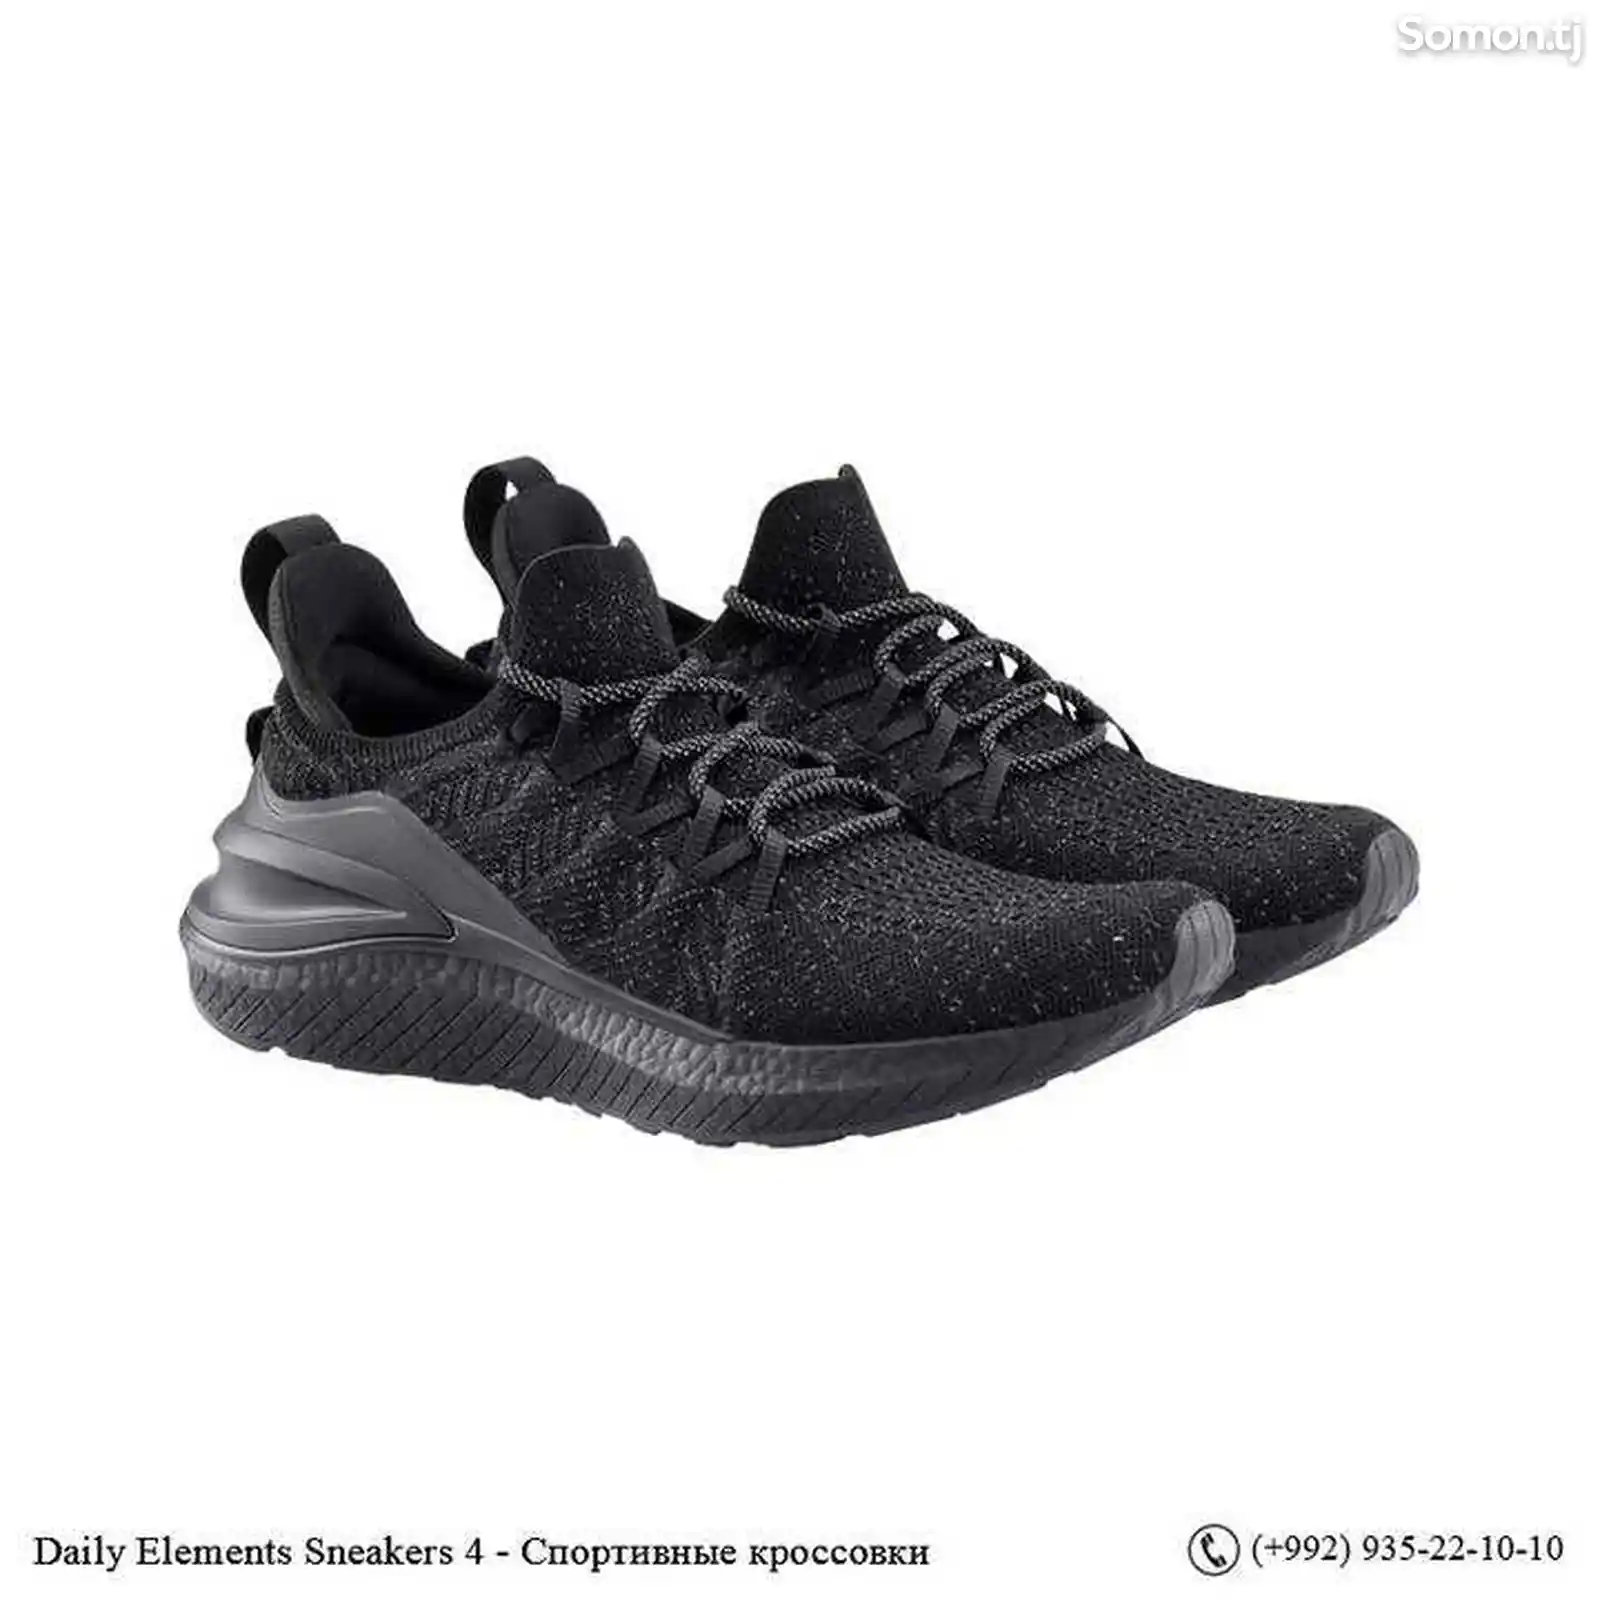 Спортивные кроссовки-Daily Elements Sneakers 4-2